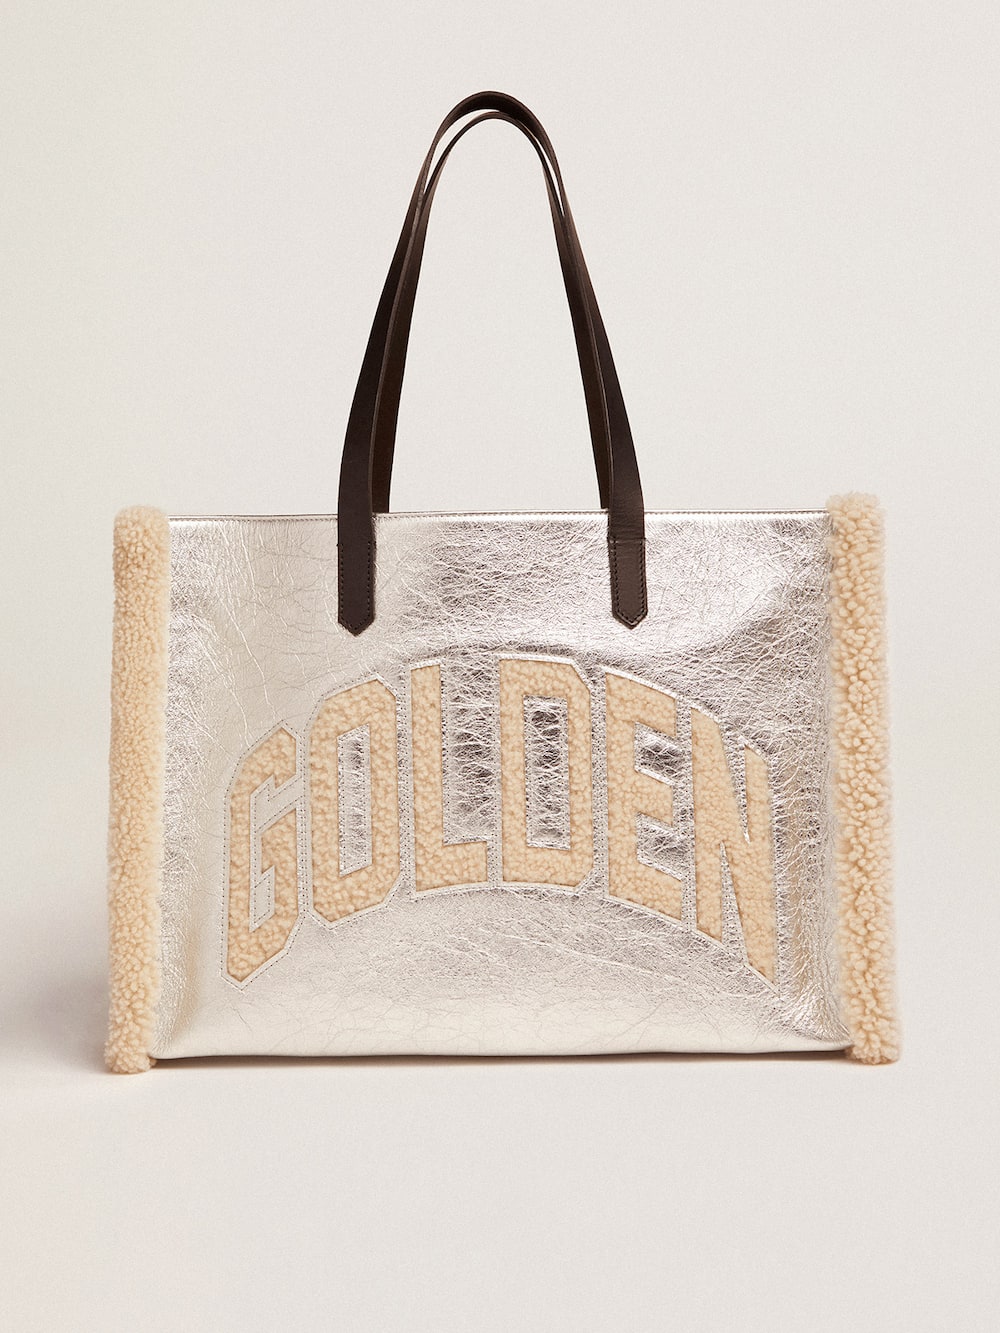 Golden Goose - California Bag East-West in pelle laminata argento e inserti in lana in 